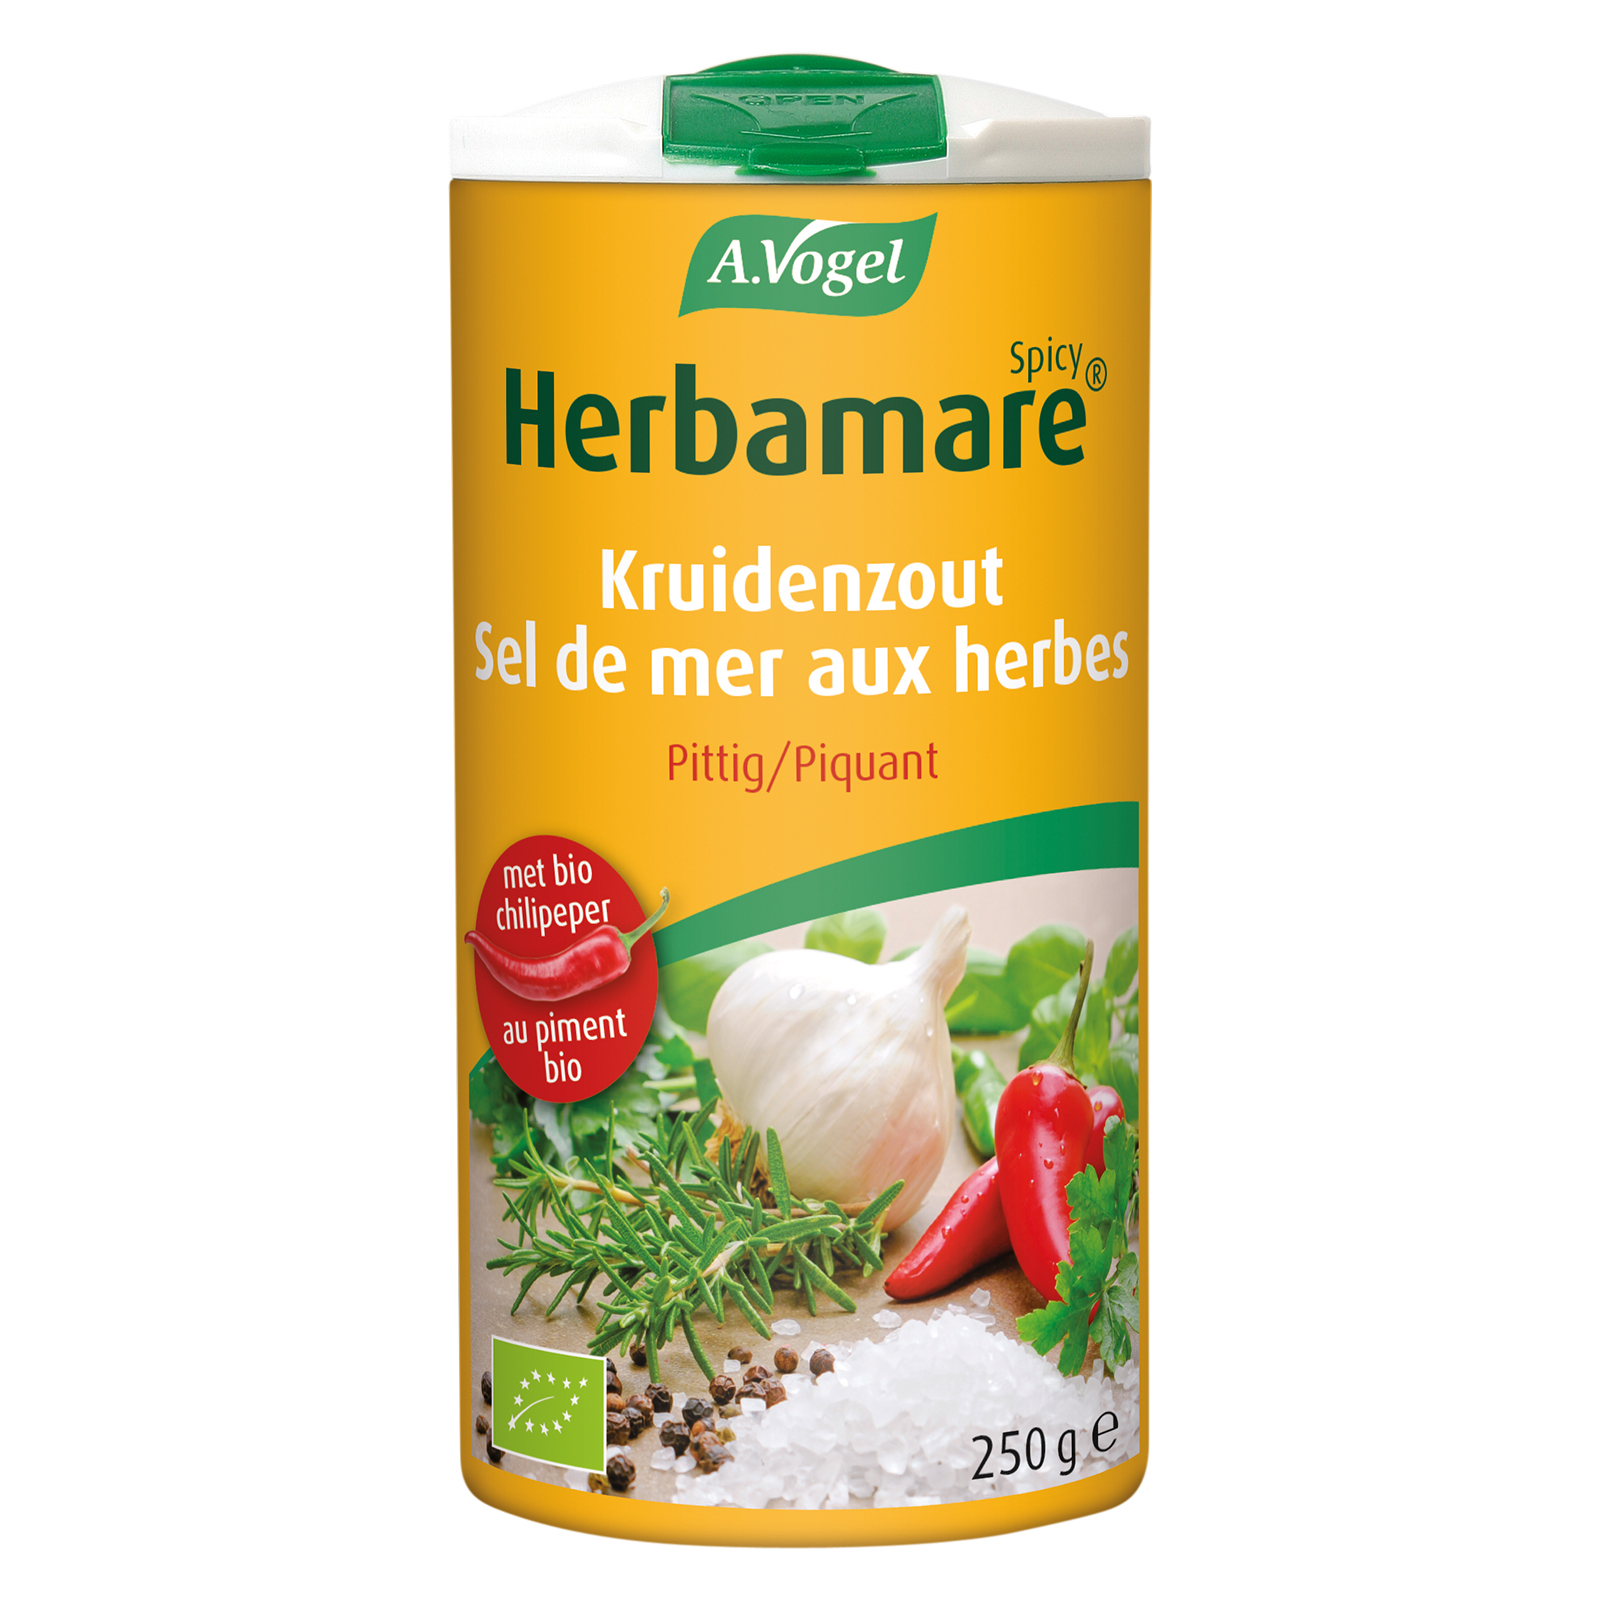 Herbamare kruidenzout spicy bio 250g